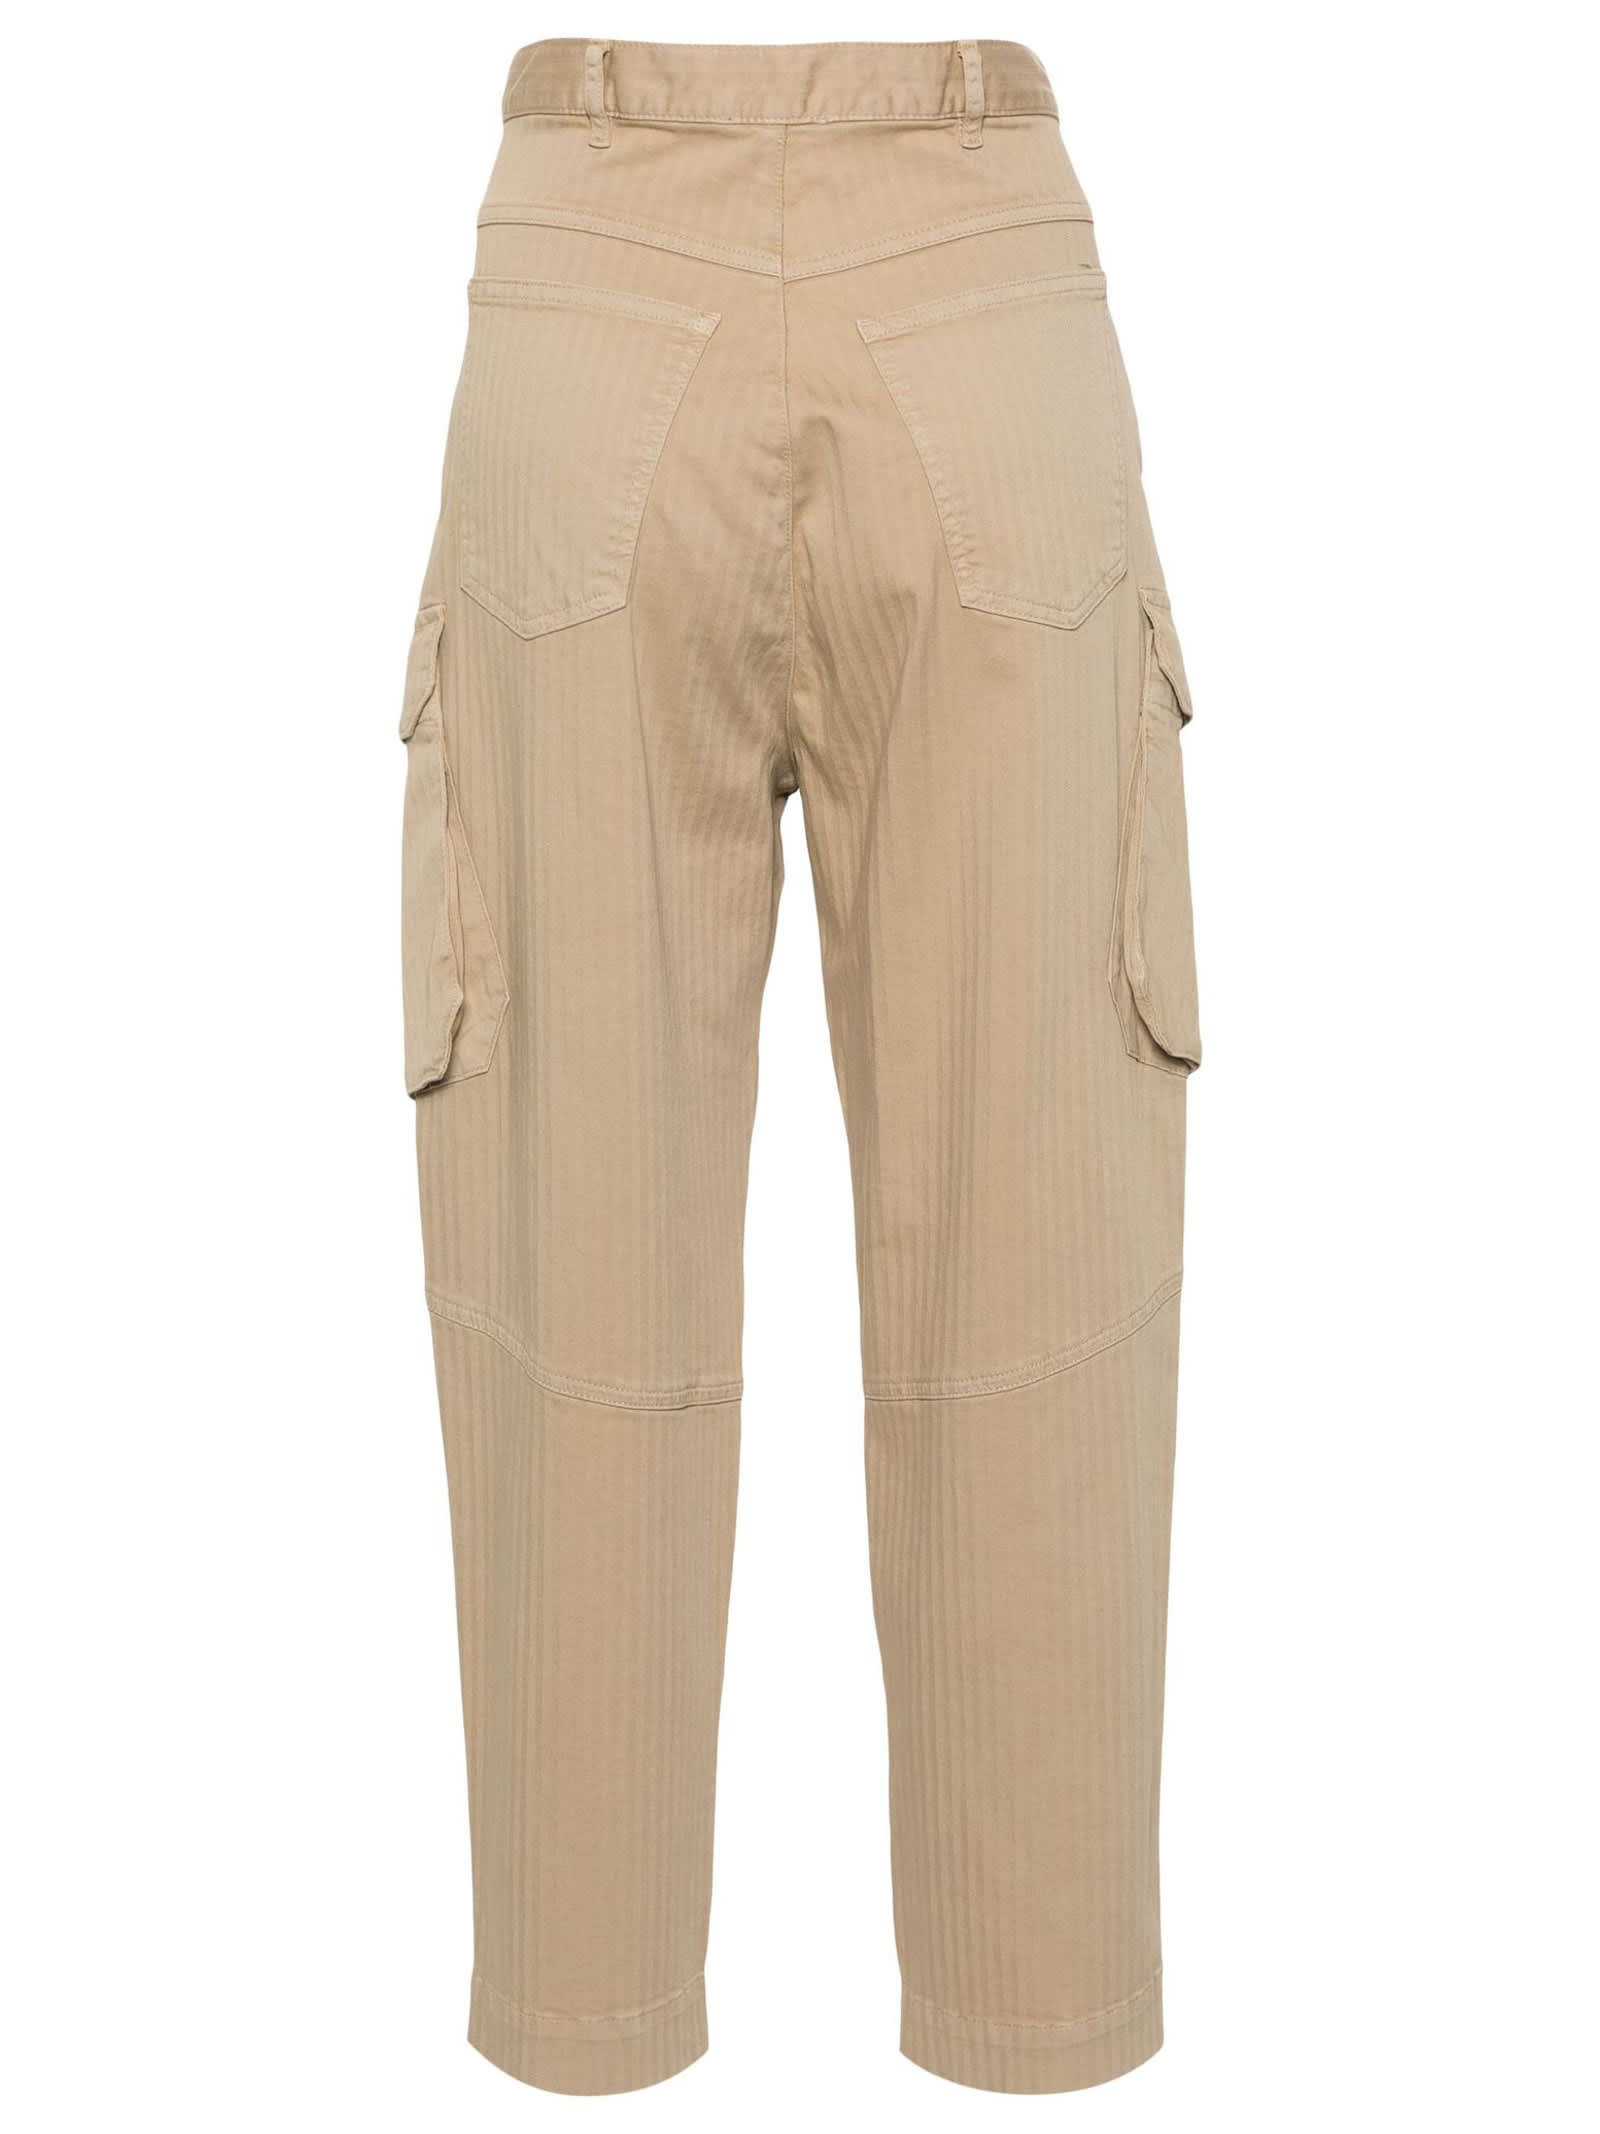 Shop Semicouture Sand Beige Cotton Blend Trousers